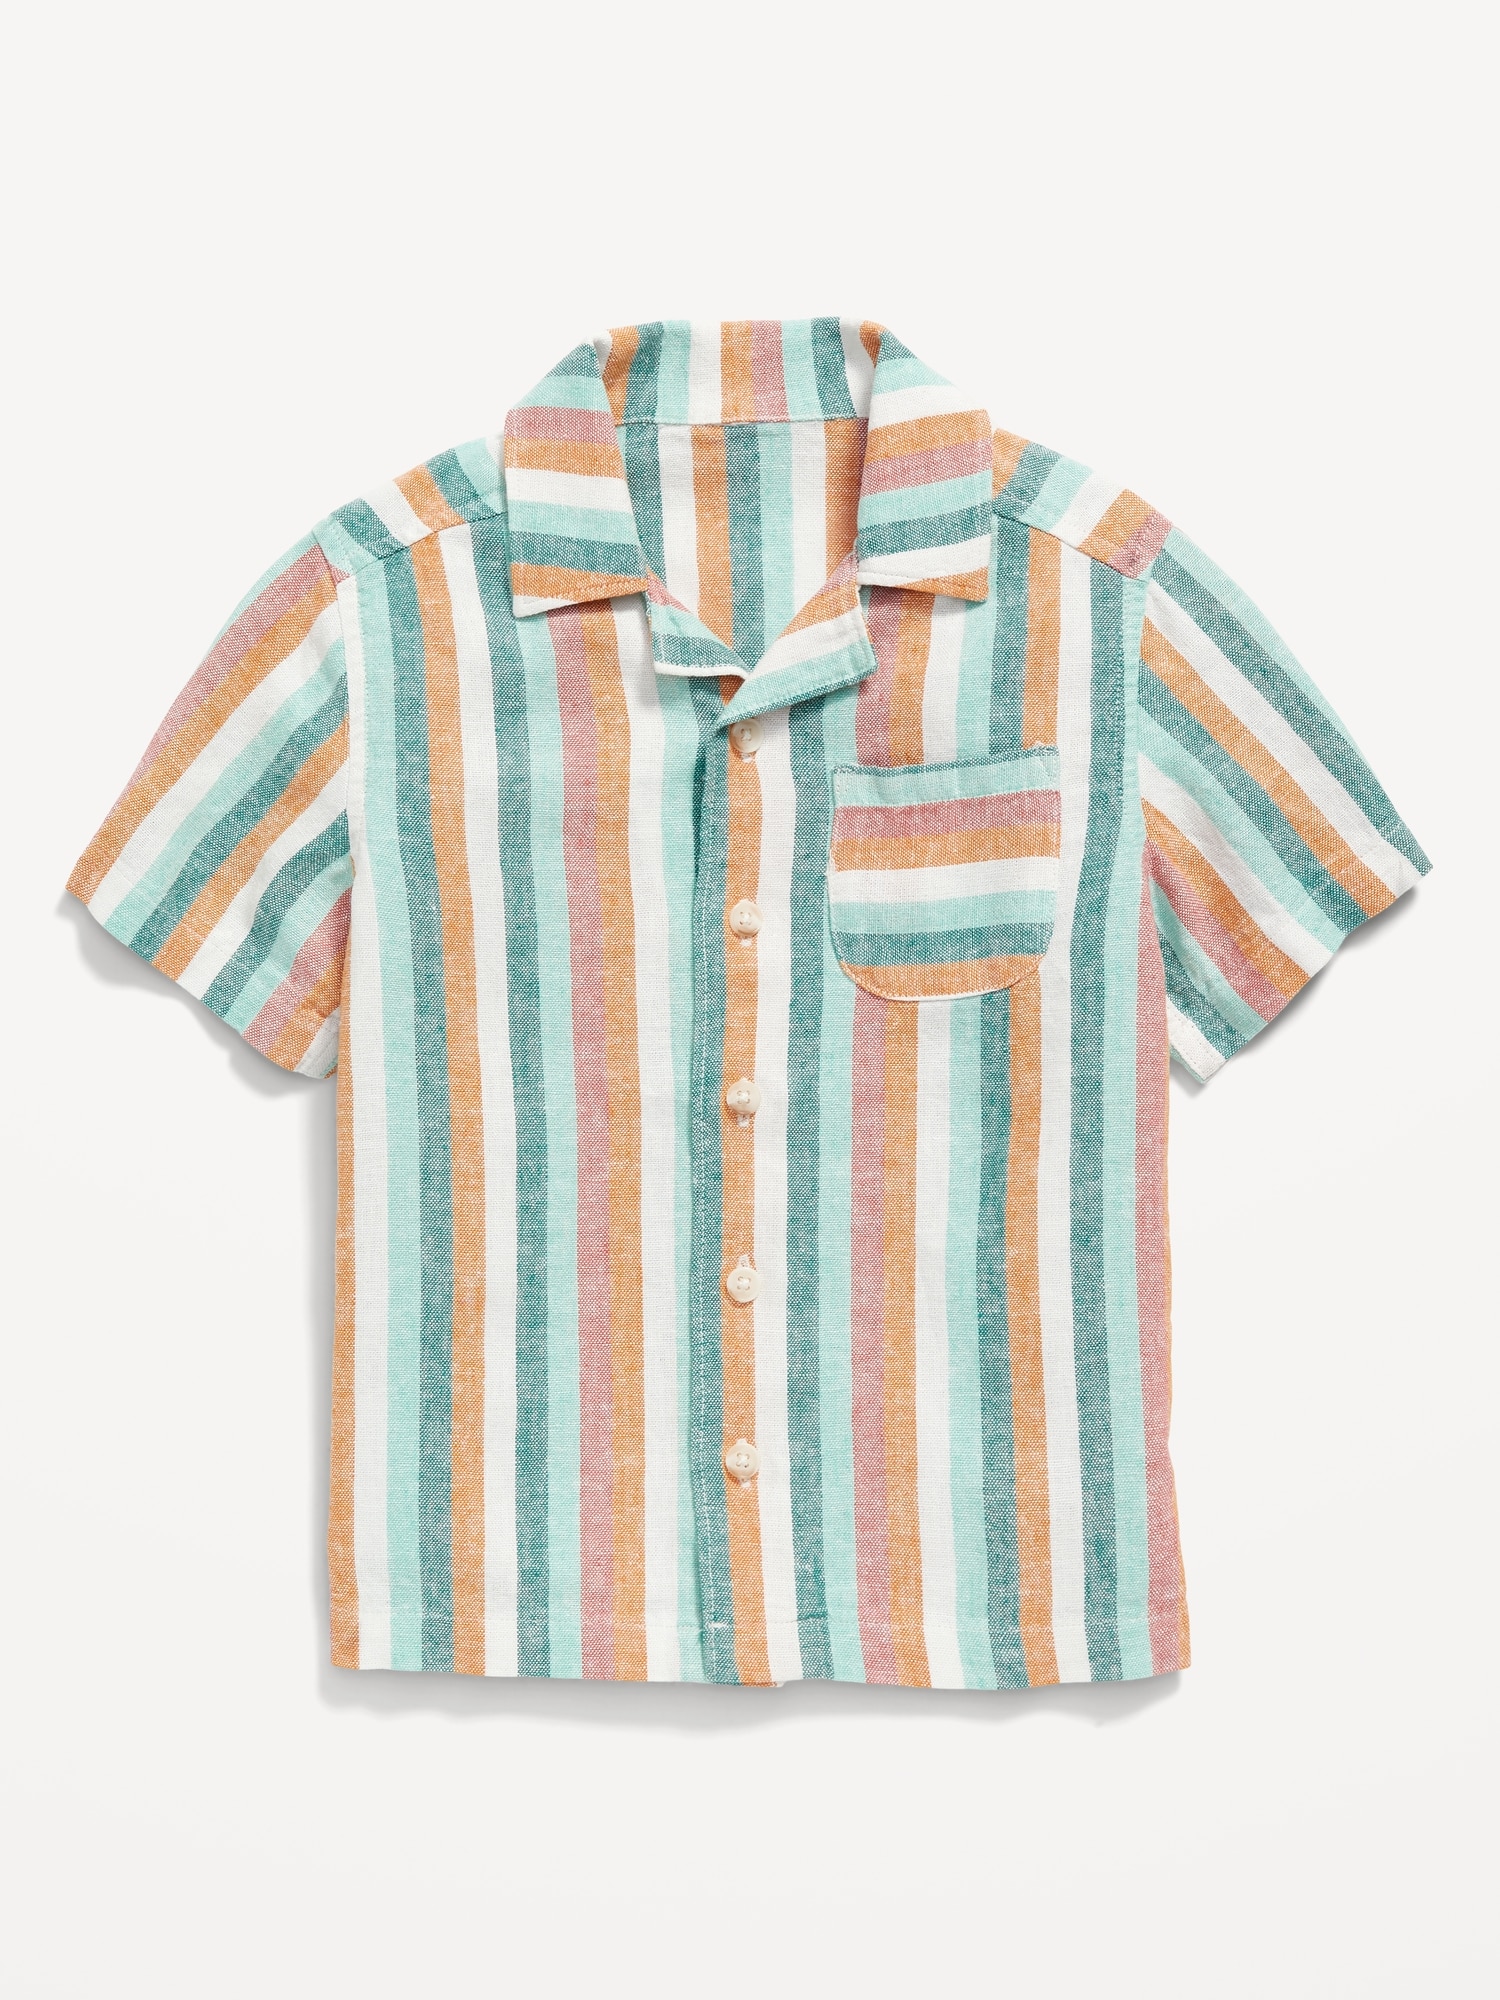 Printed Pocket Camp Shirt for Toddler Boys